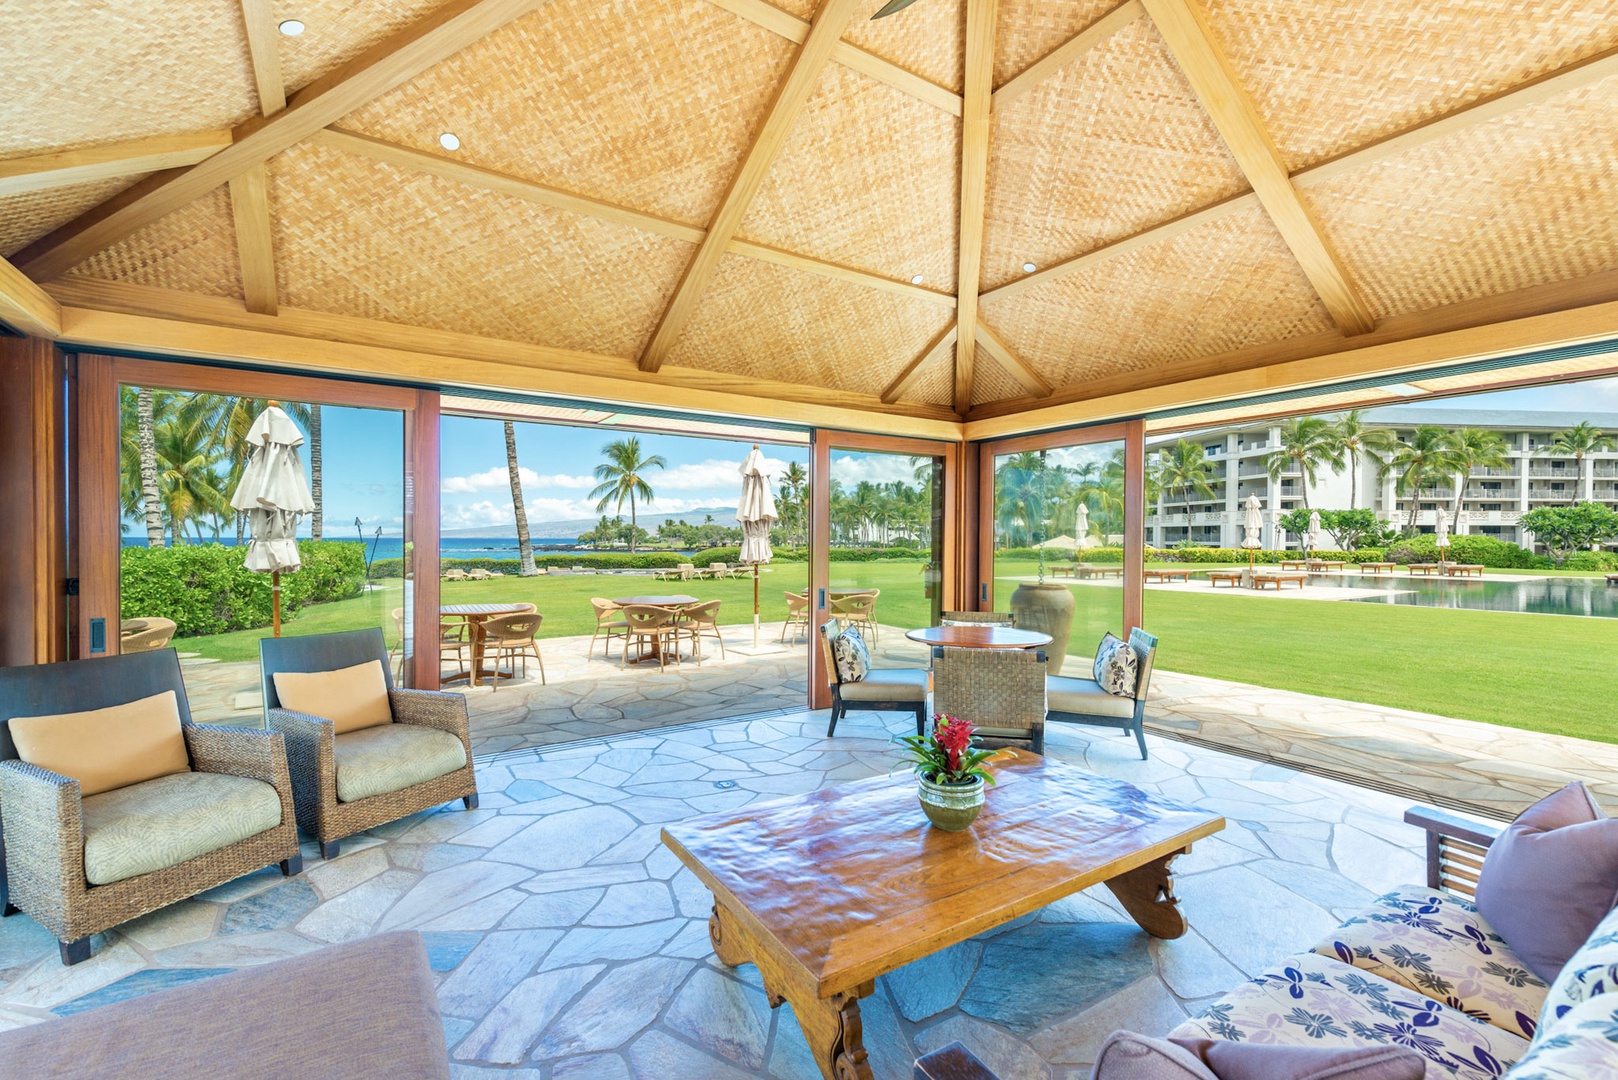 Kamuela Vacation Rentals, 3BD Na Hale 3 at Pauoa Beach Club at Mauna Lani Resort - Discover tranquility and service at Pauoa Beach Club's shaded lounge with views